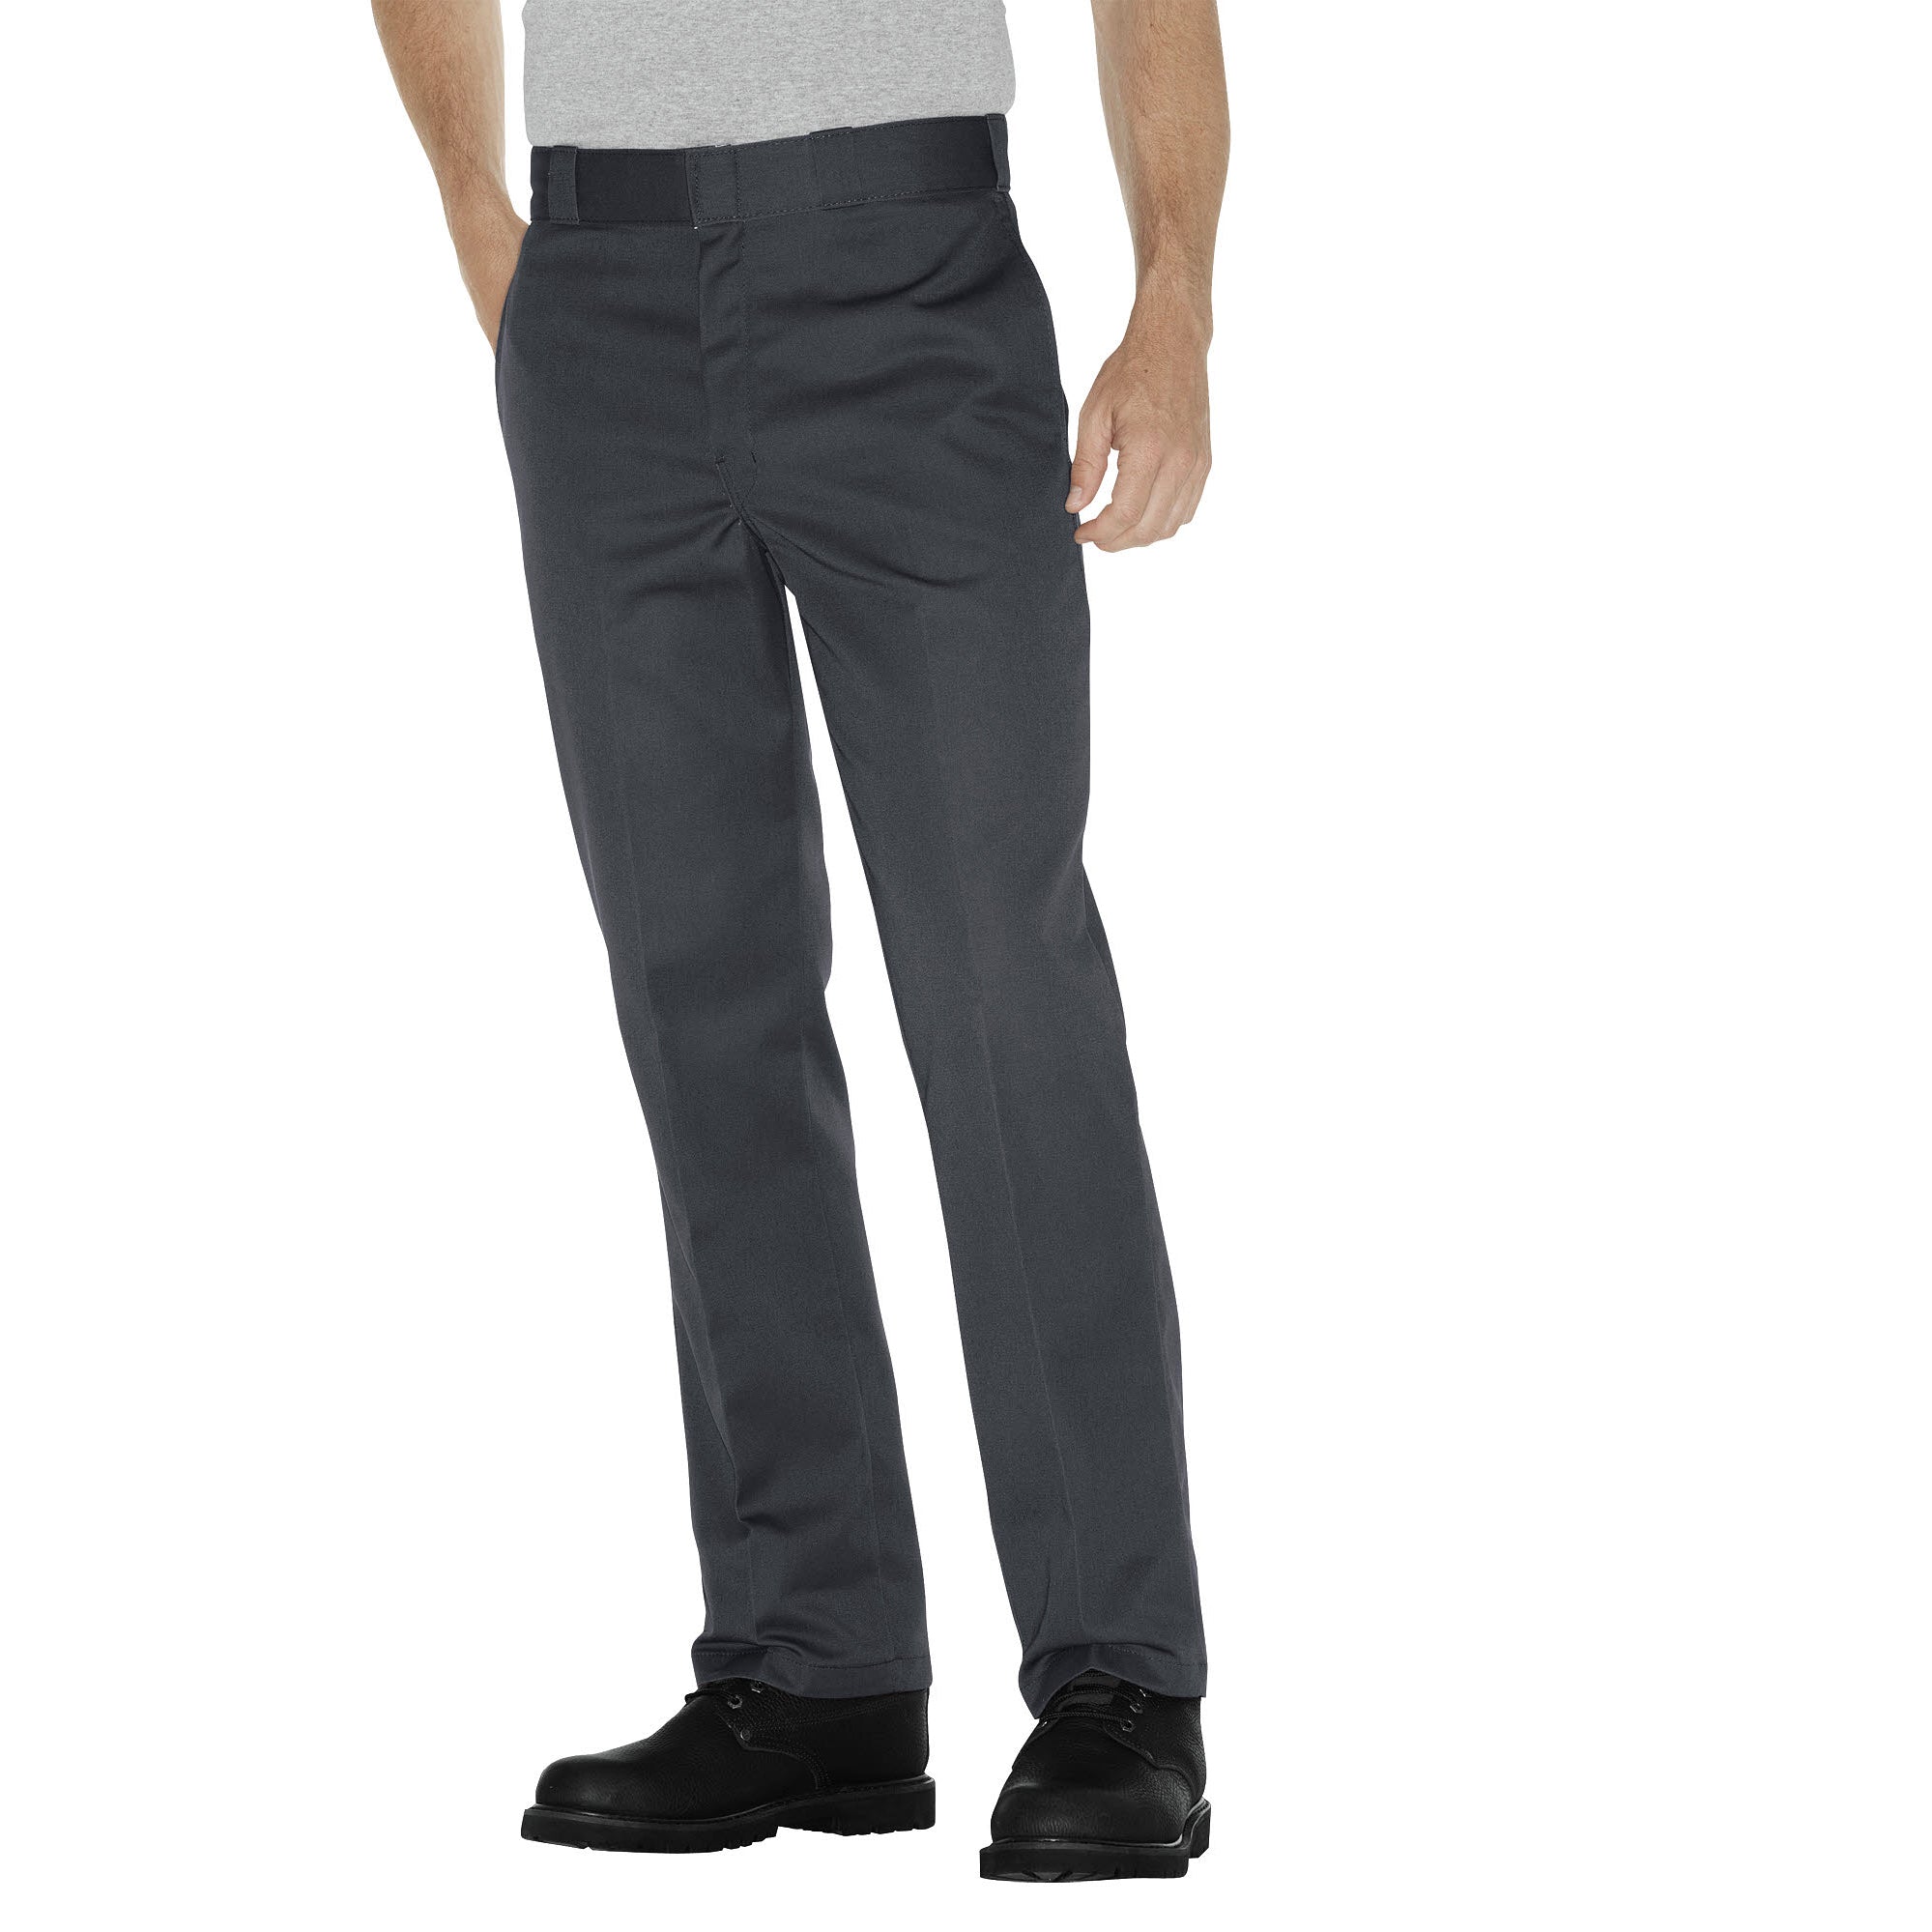 Men's DICKIES Work Uniform Loose Fit Pants Size 52x30 - beyond